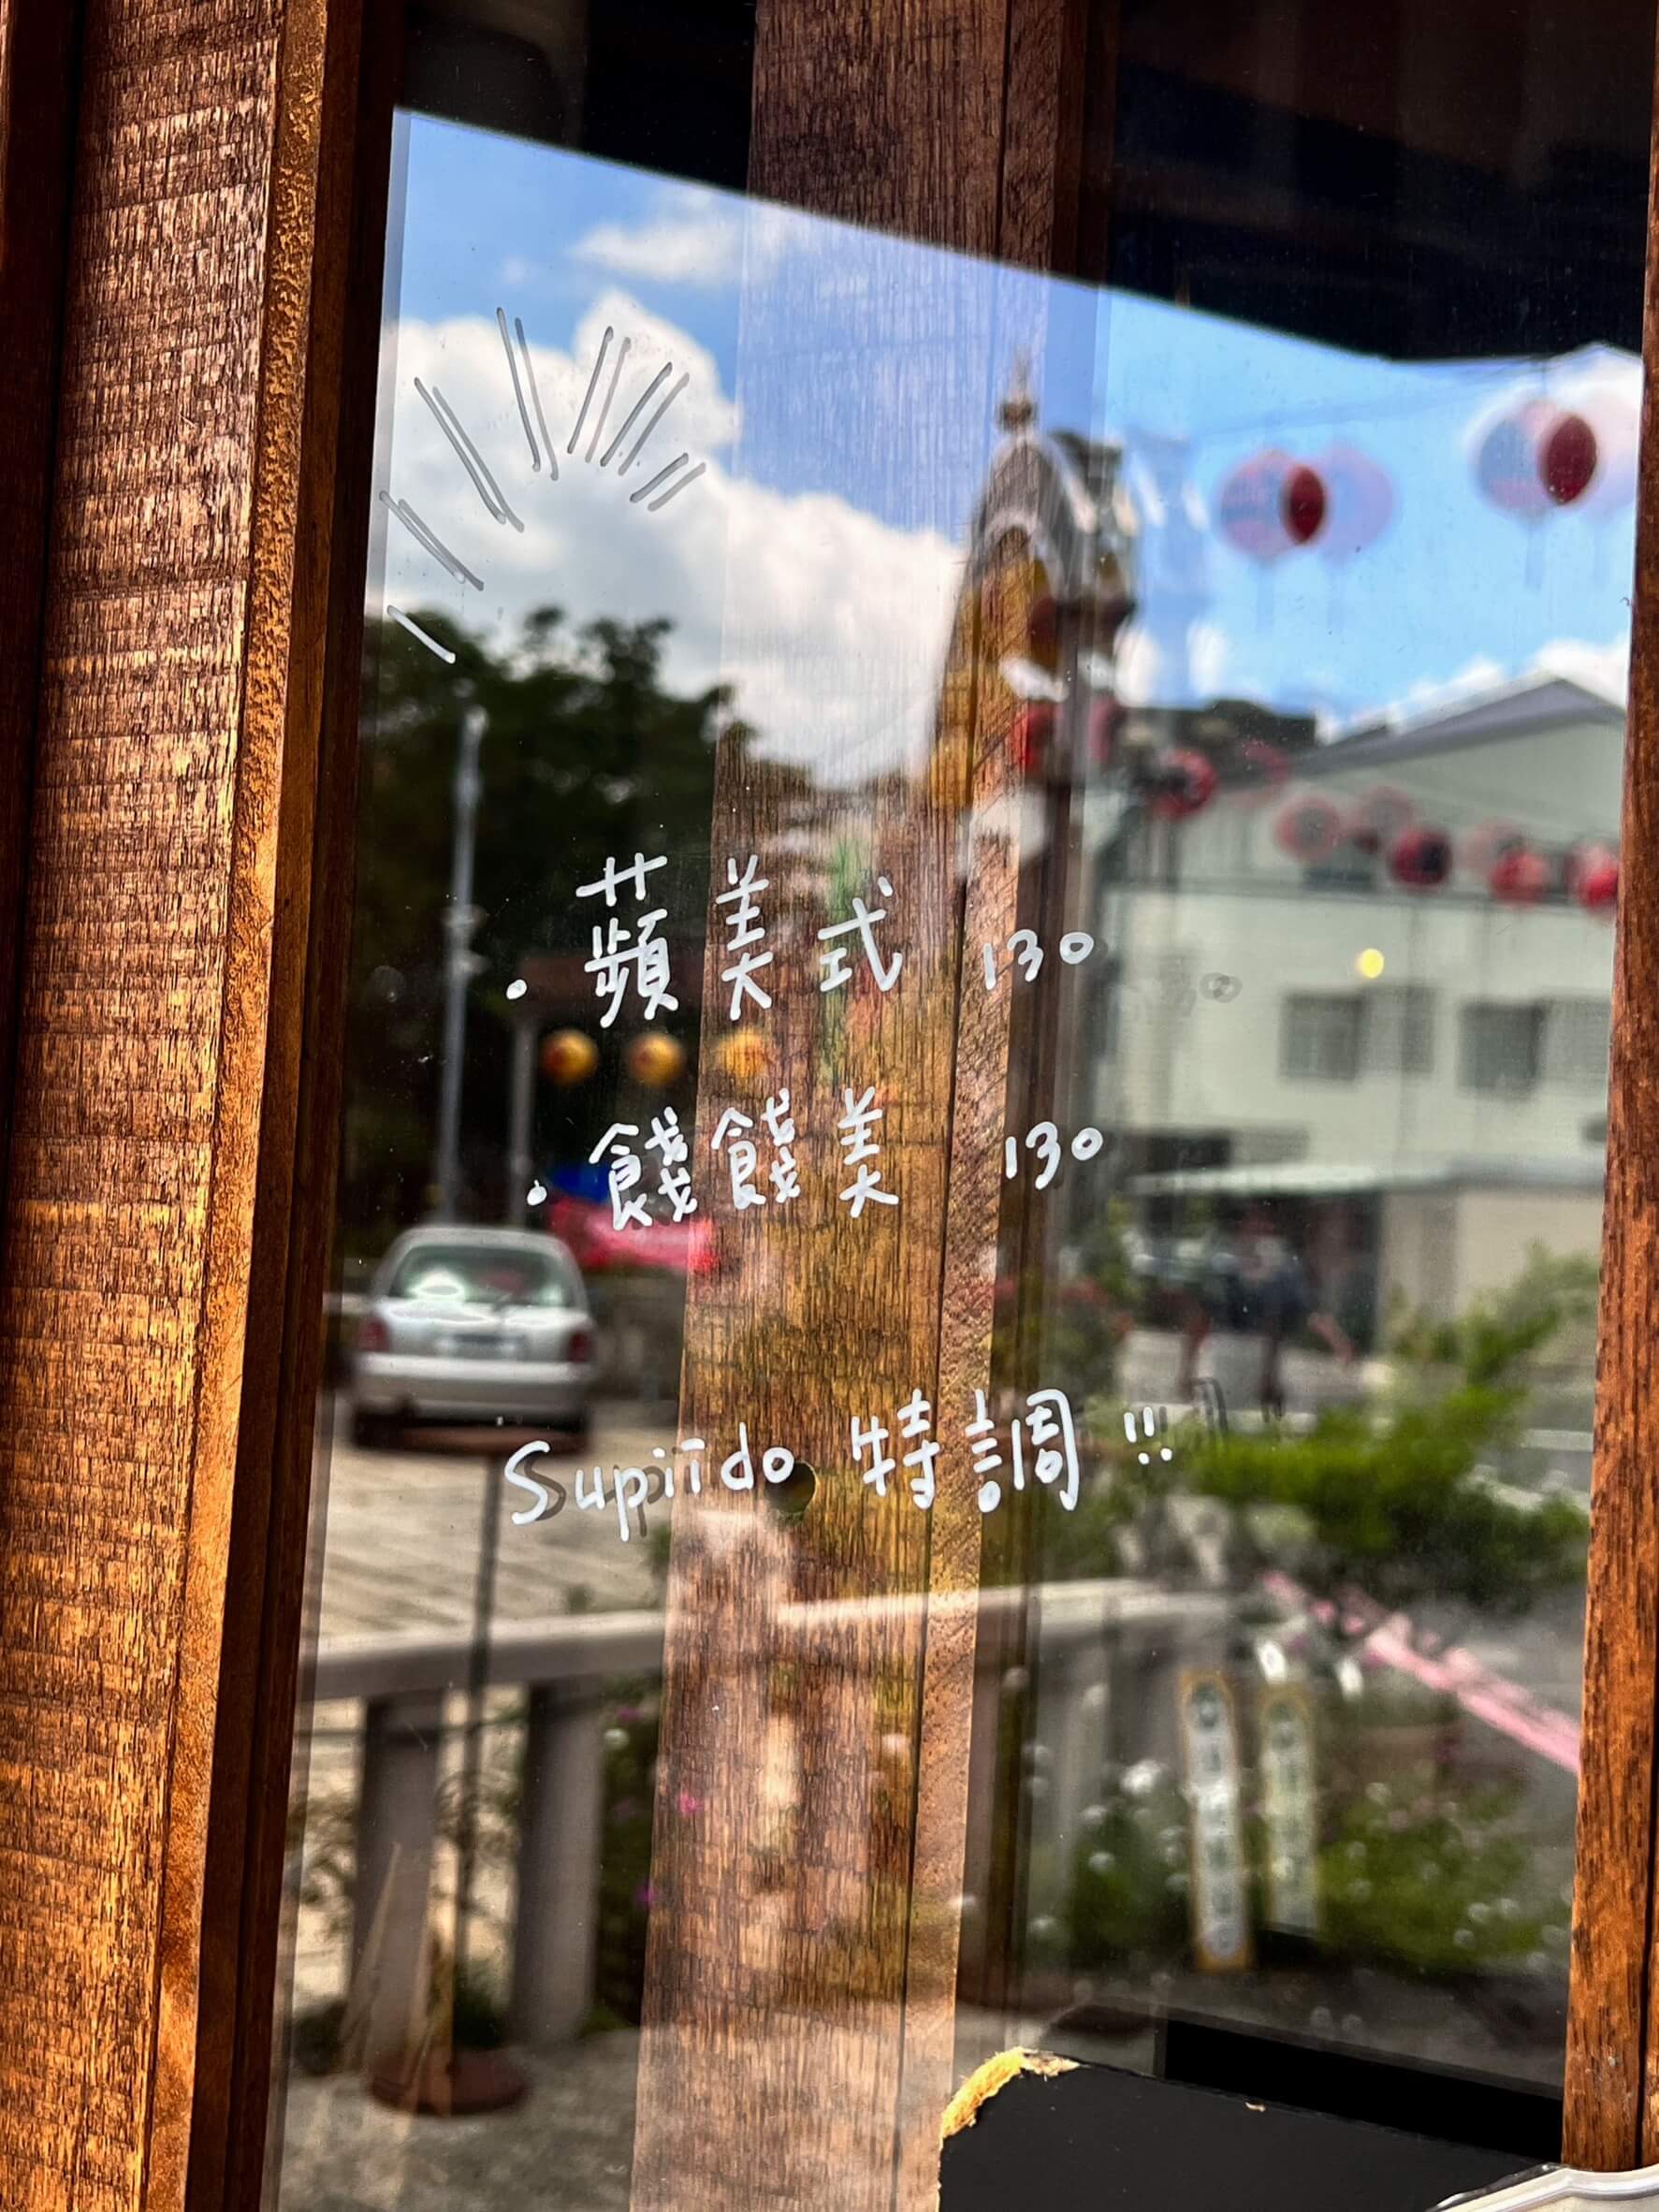 嘉義日式風格咖啡外帶店【スピード Supiido】坐落於市定古蹟仁武宮旁